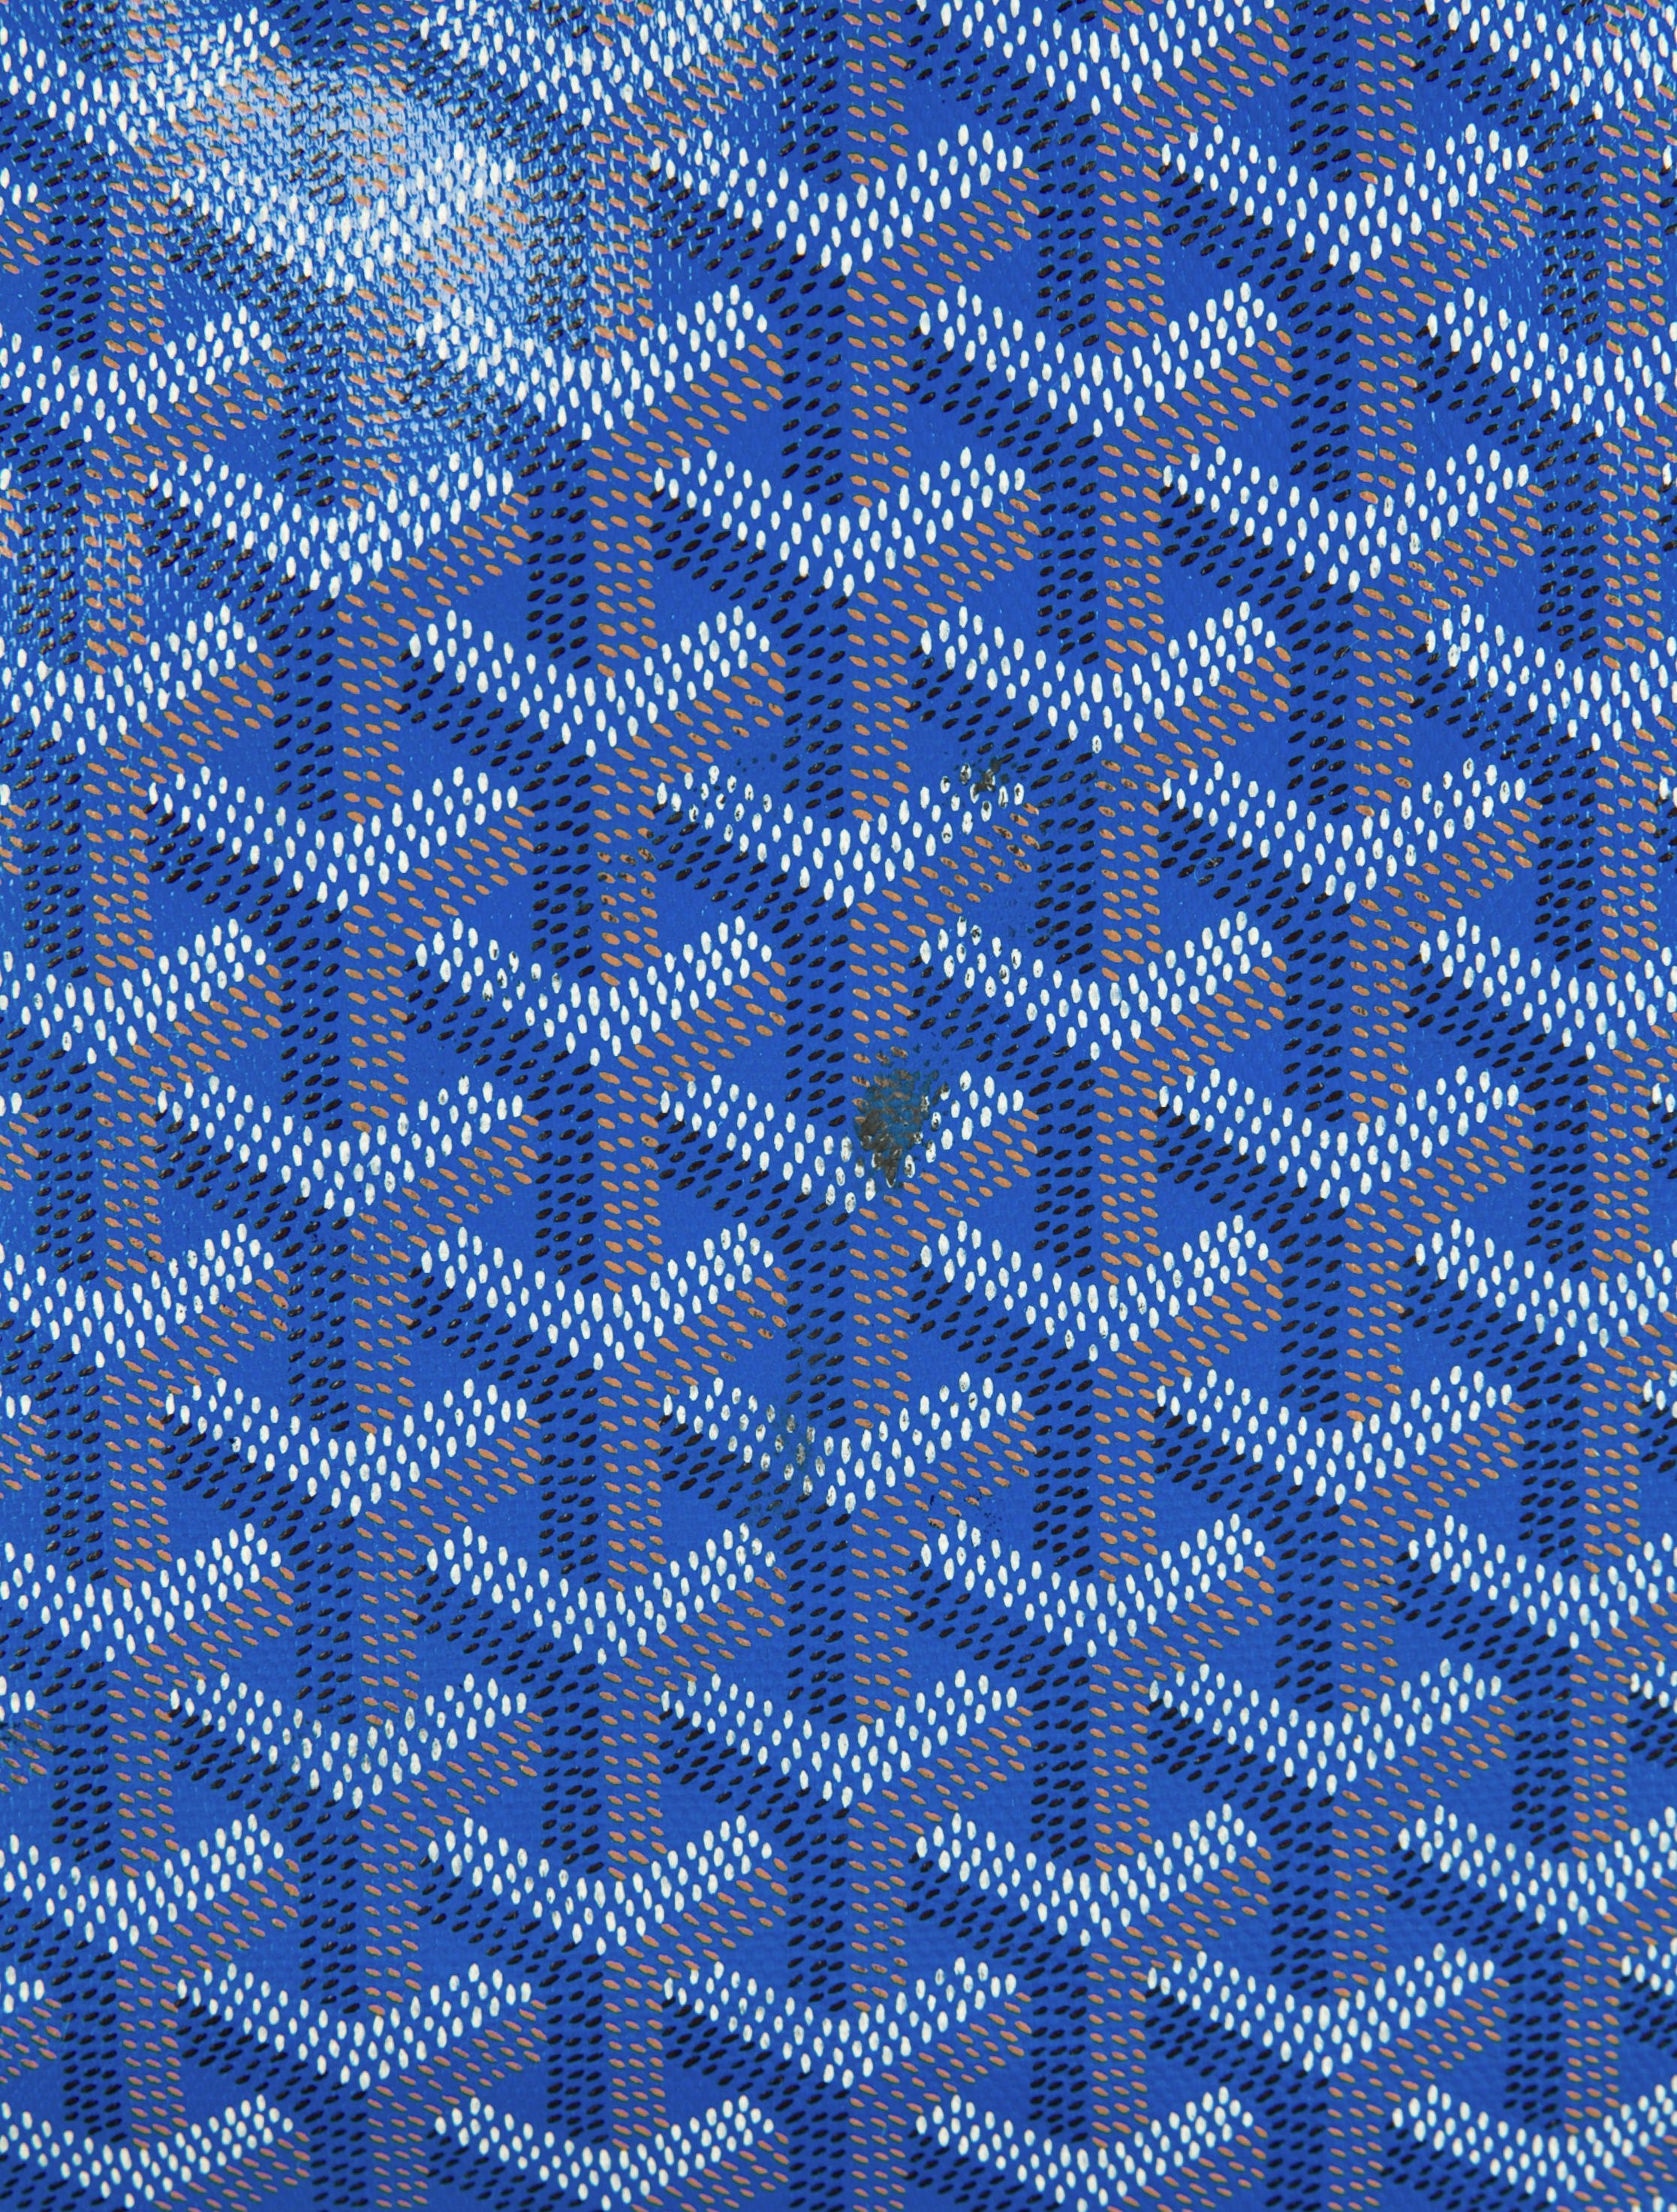 wallpaper goyard blue